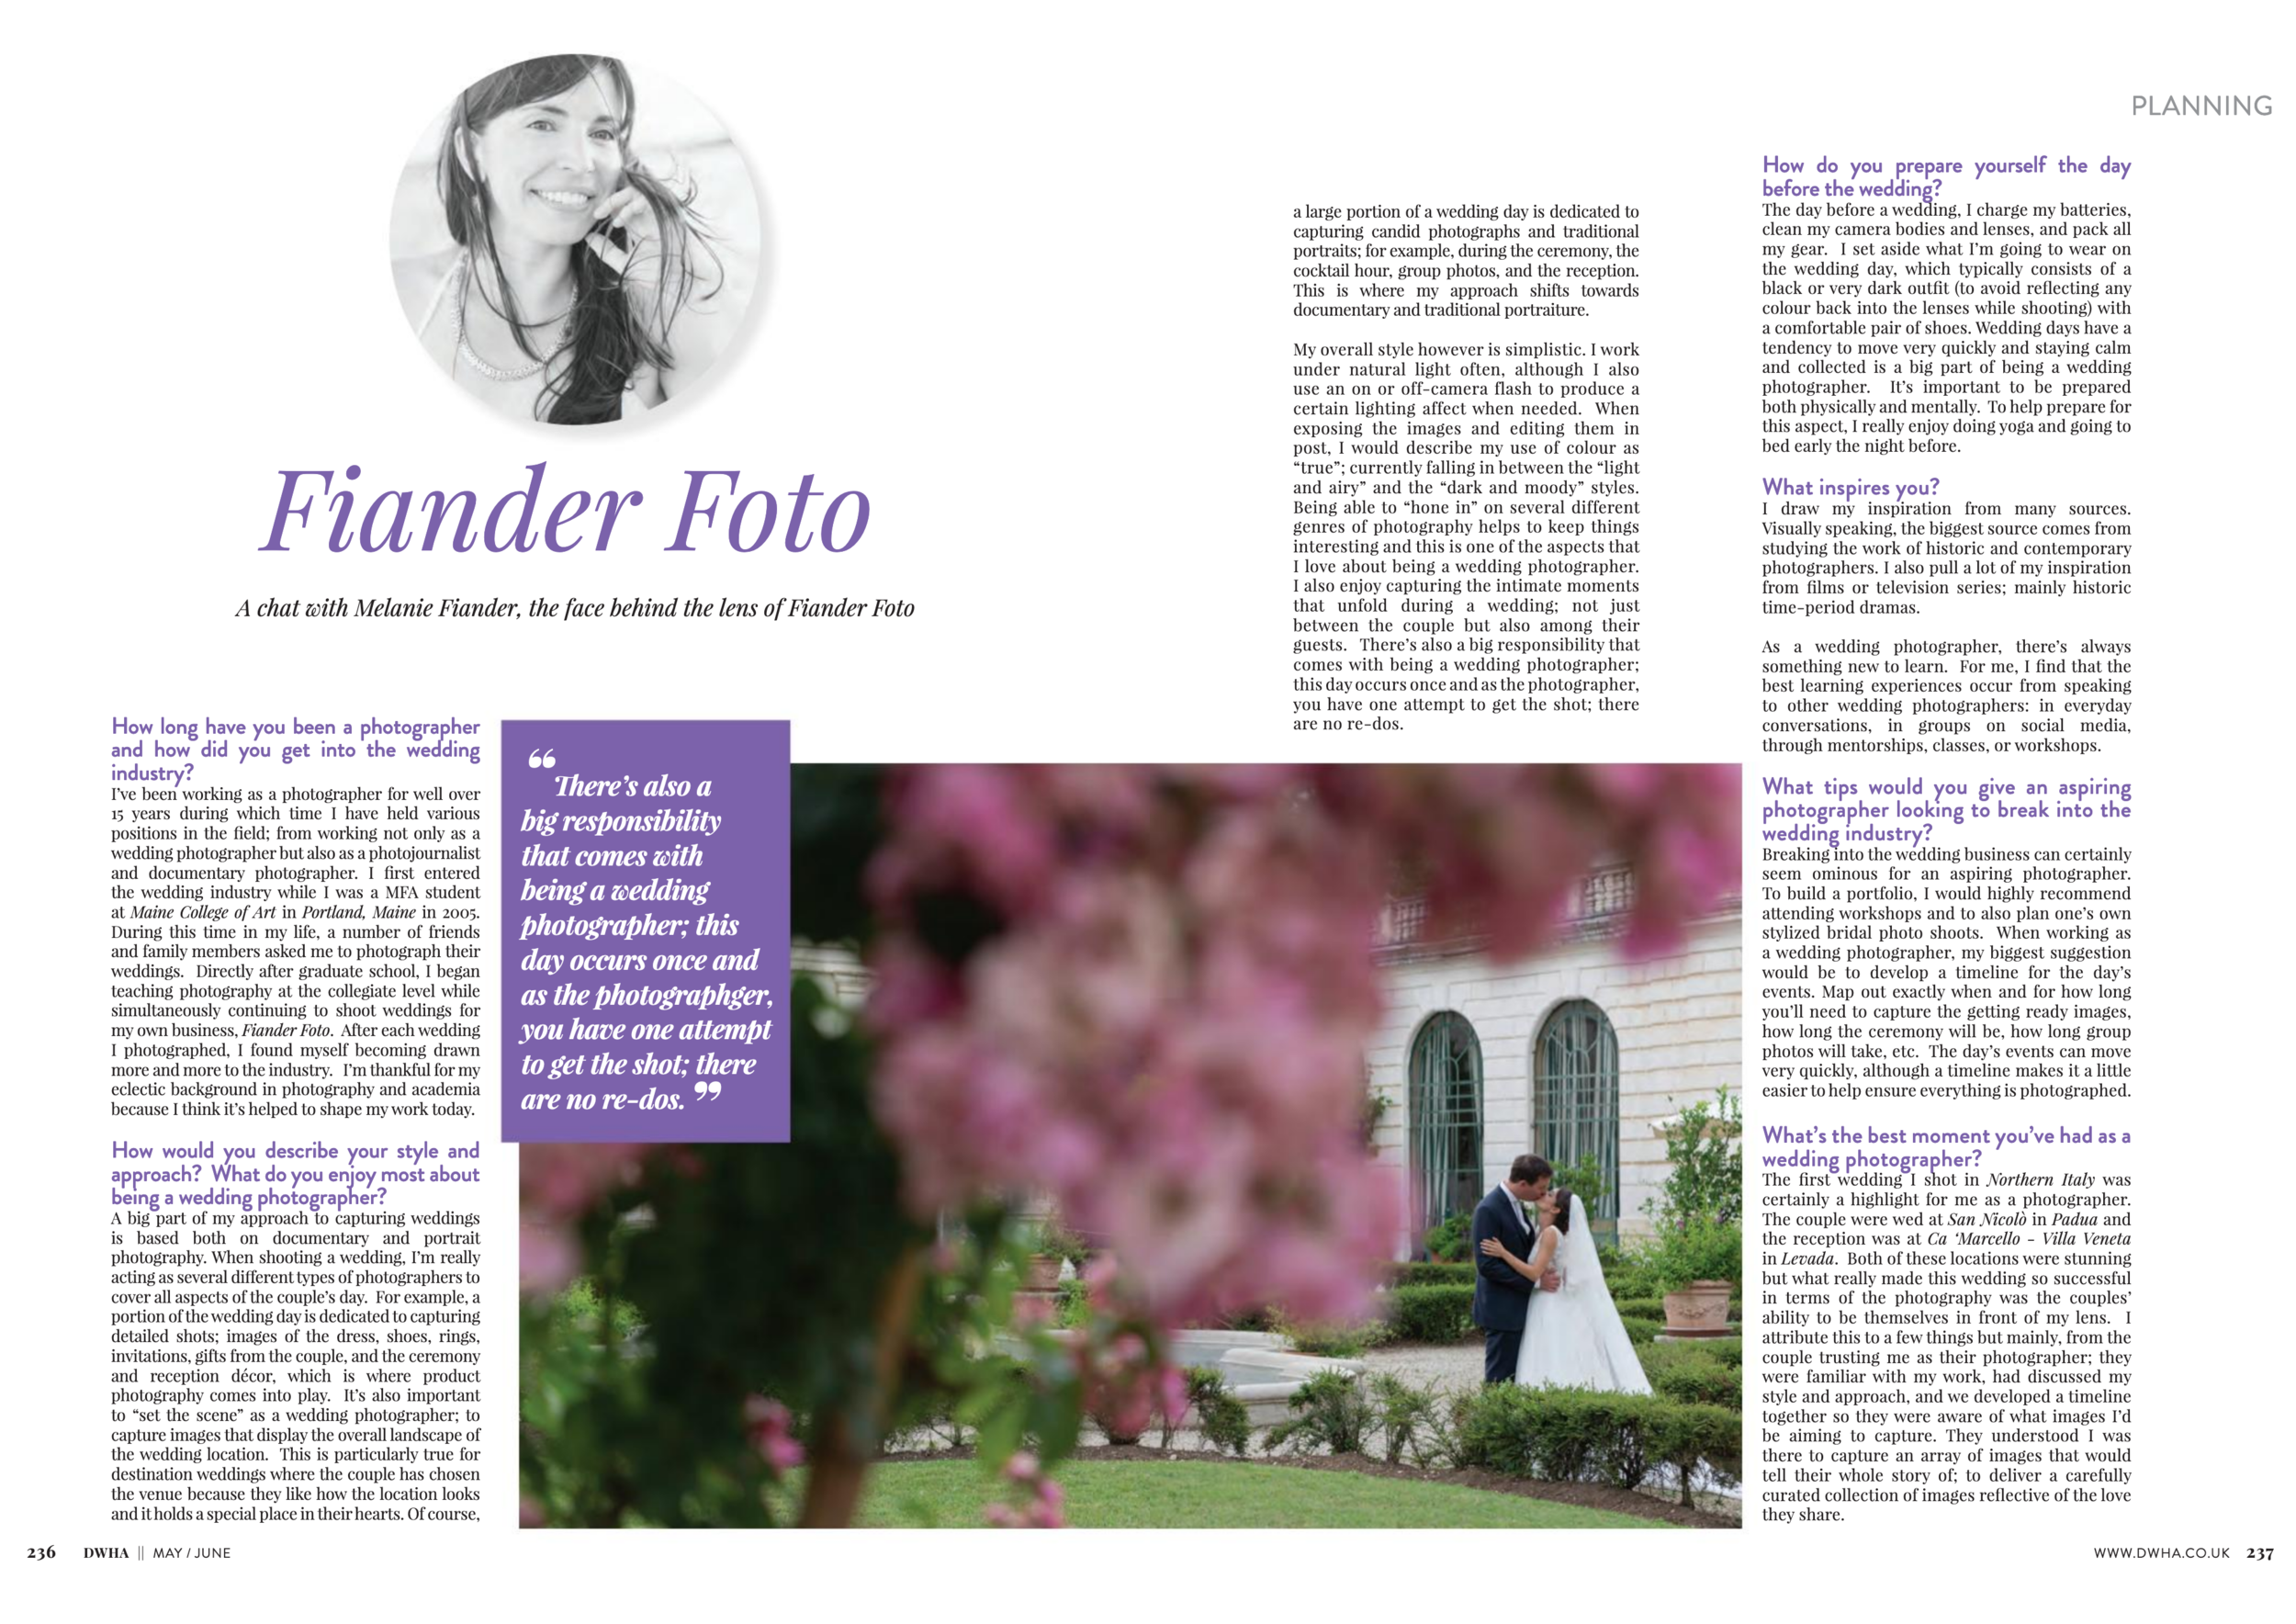 Destination Wedding Photographer_Fiander Foto_Destination Weddings and Honeymoons Abroad_Interview_June 2019_2.png